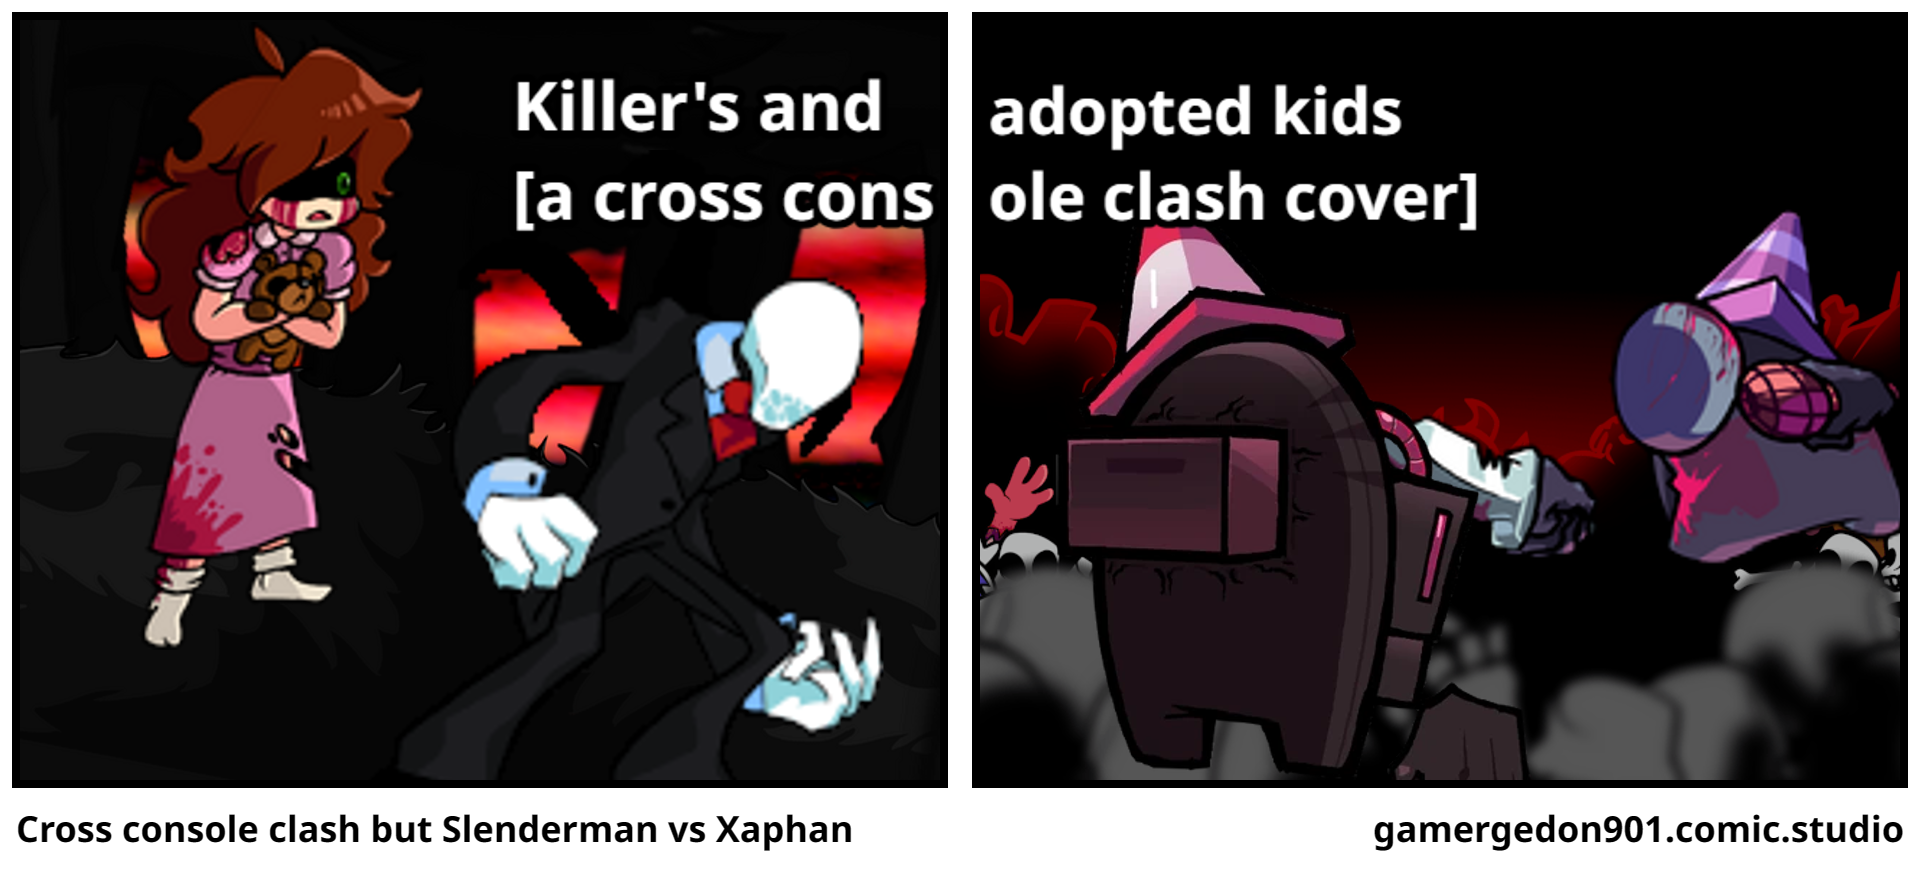 Cross console clash but Slenderman vs Xaphan